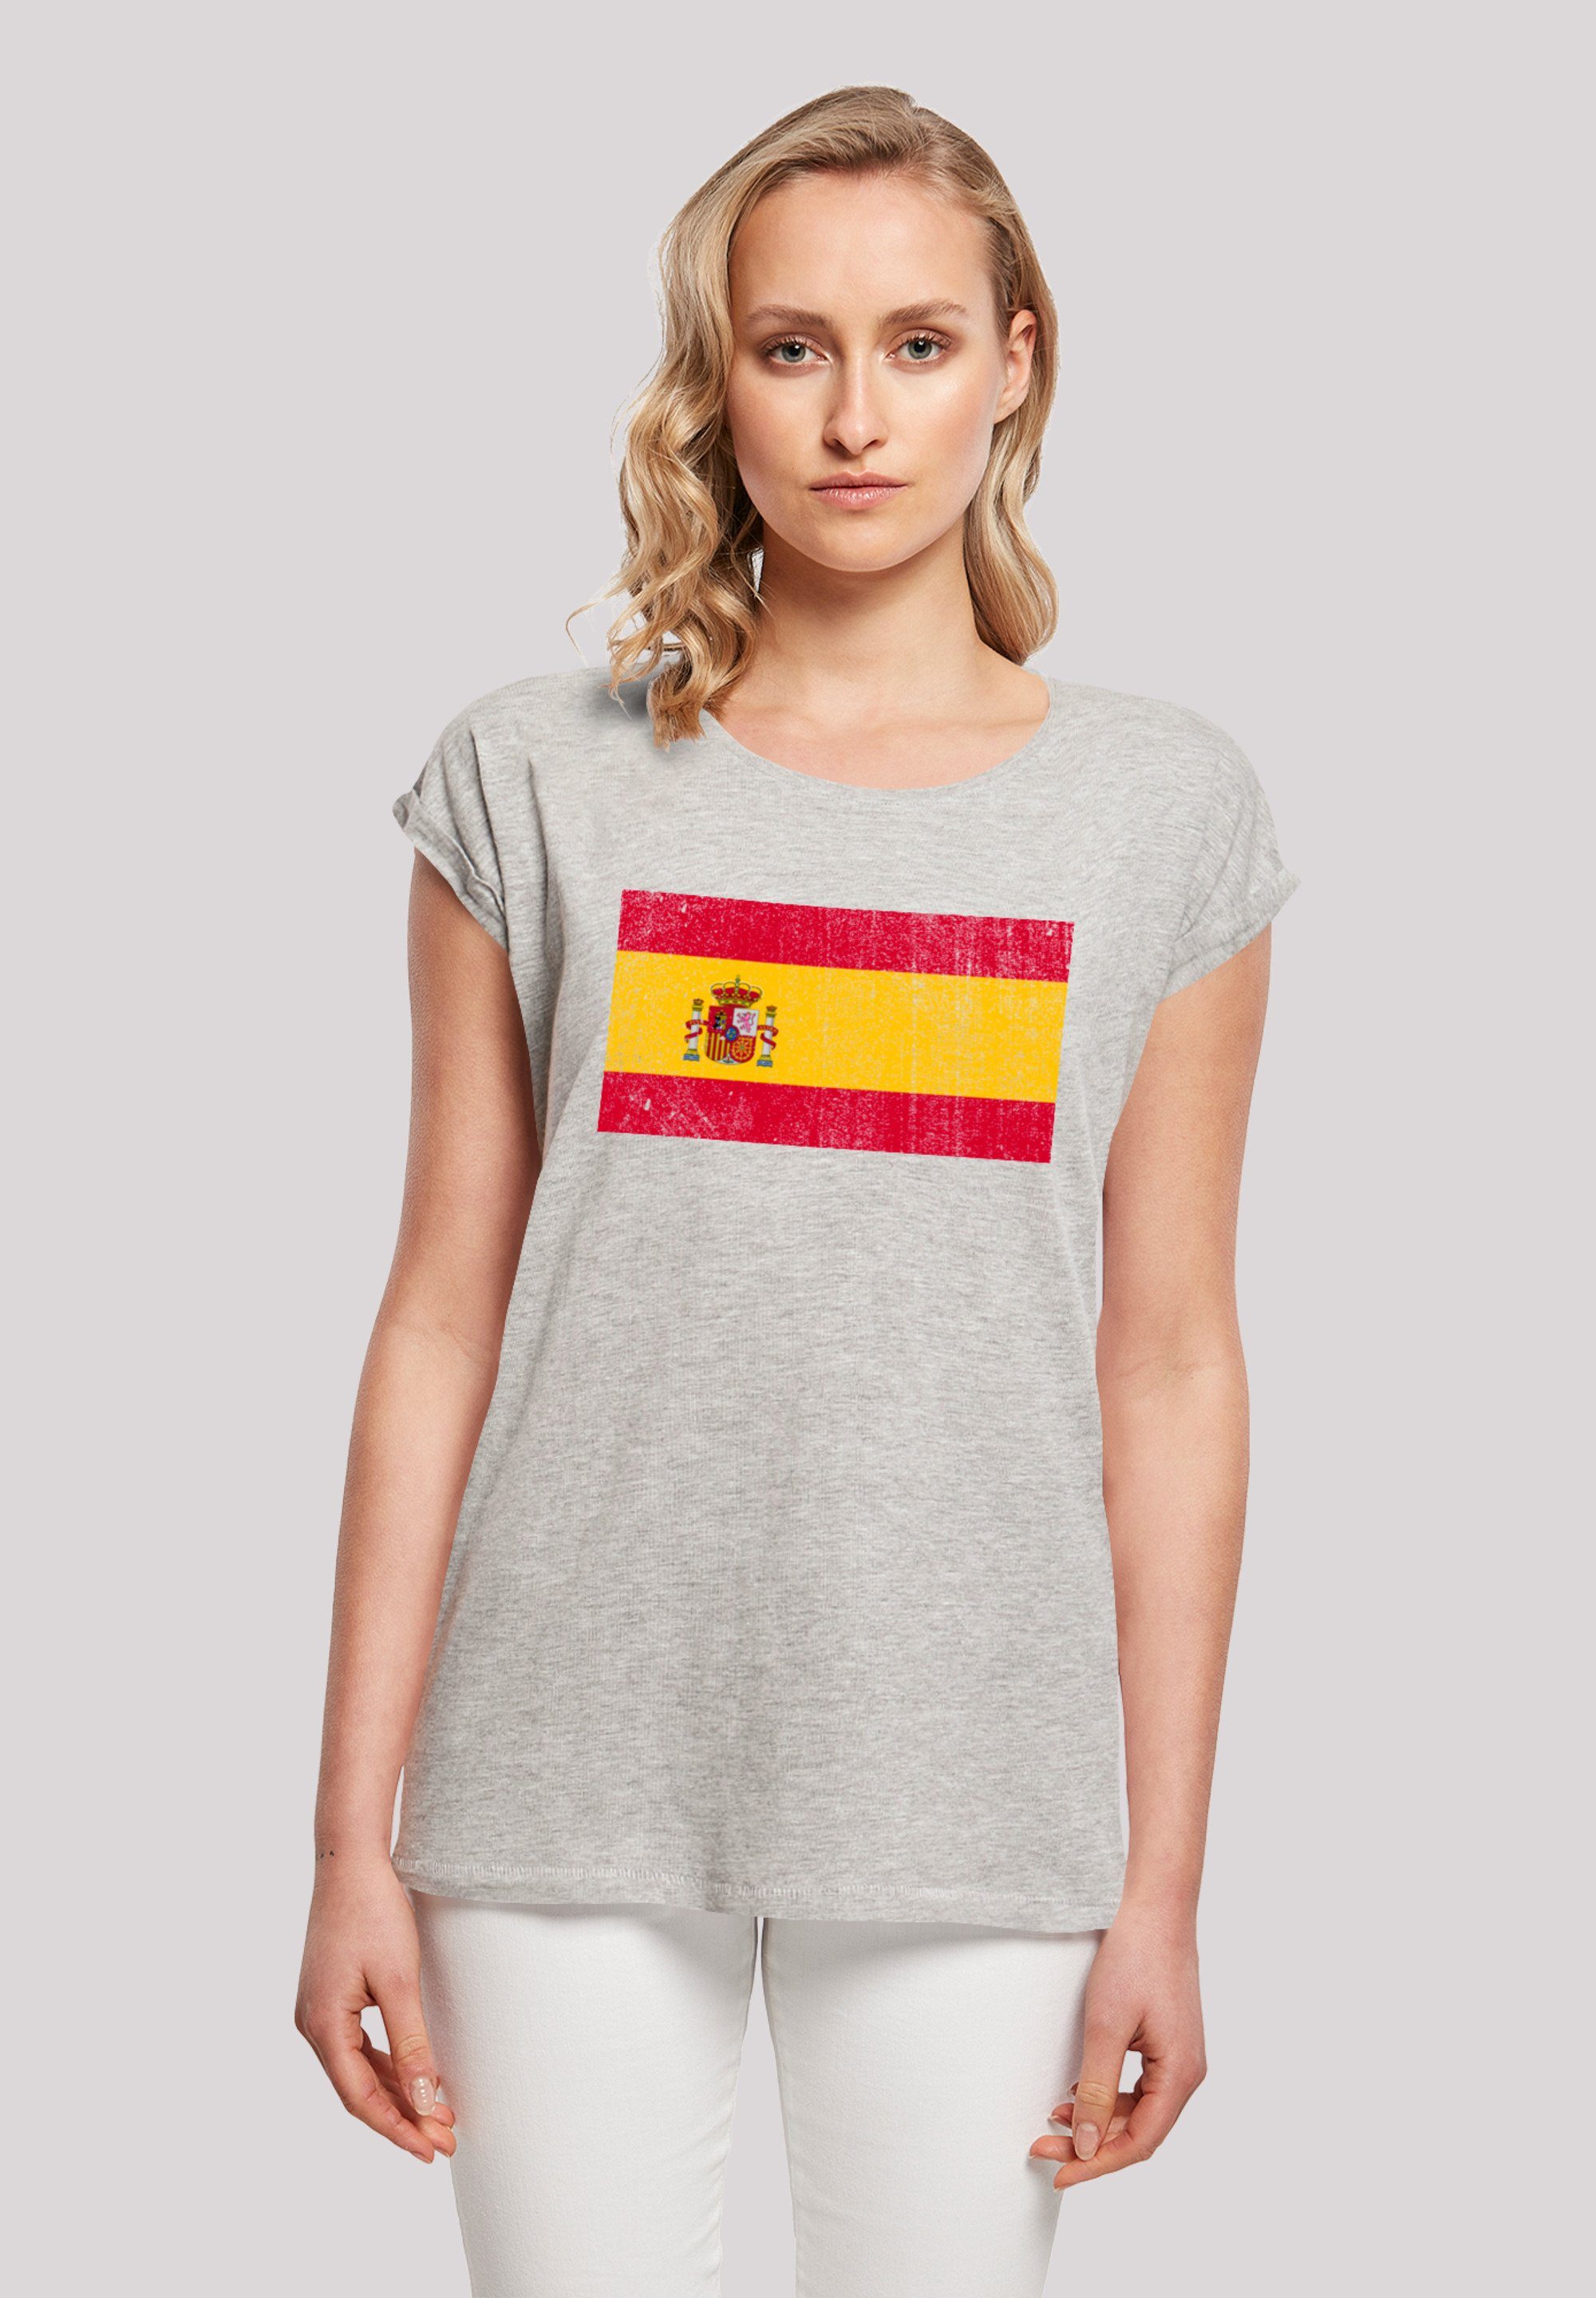 F4NT4STIC T-Shirt Spain Spanien cm Model Das 170 ist distressed Print, trägt M und Flagge groß Größe